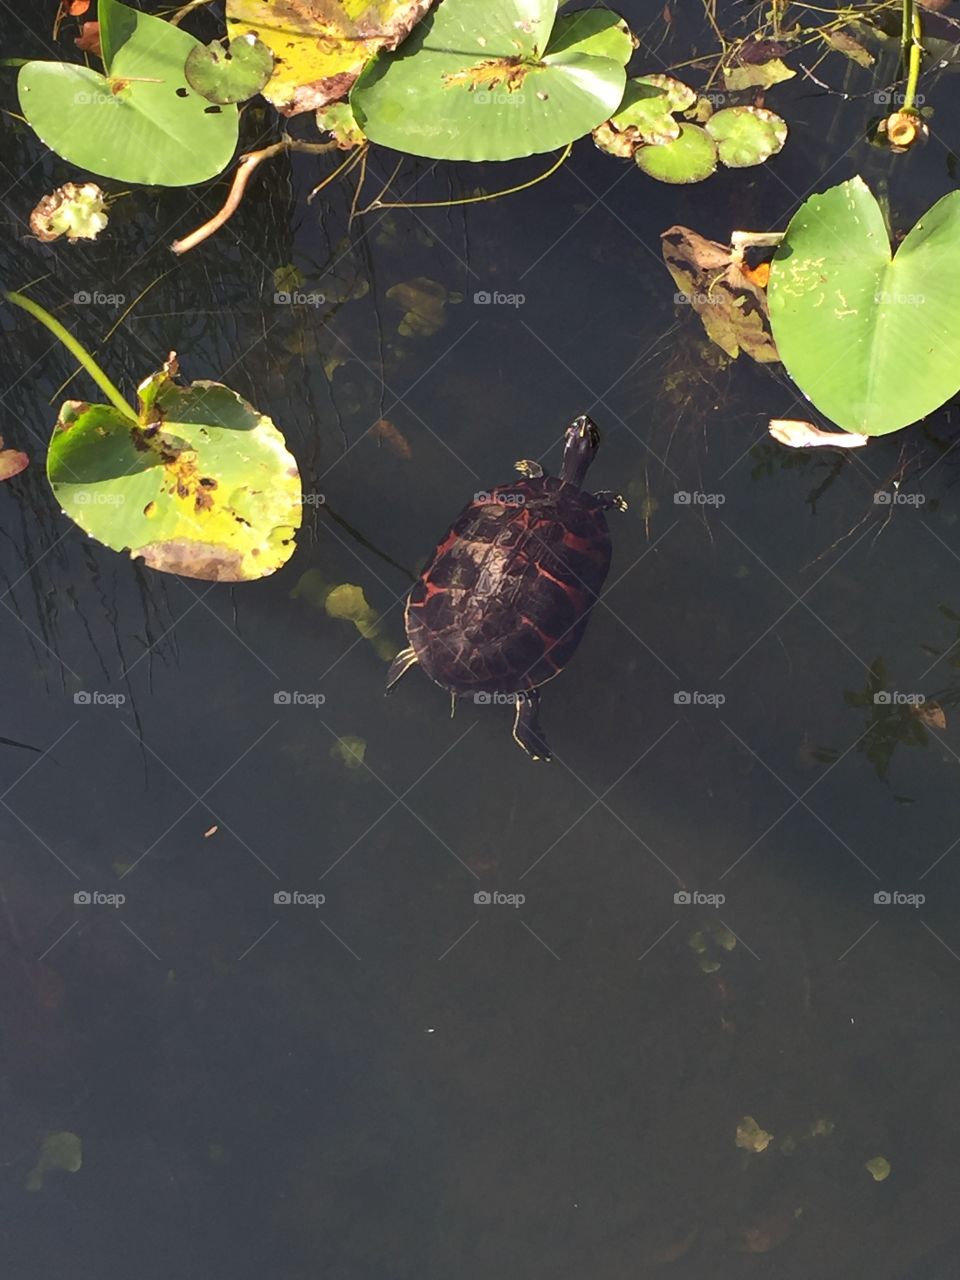 #turtle #everglades